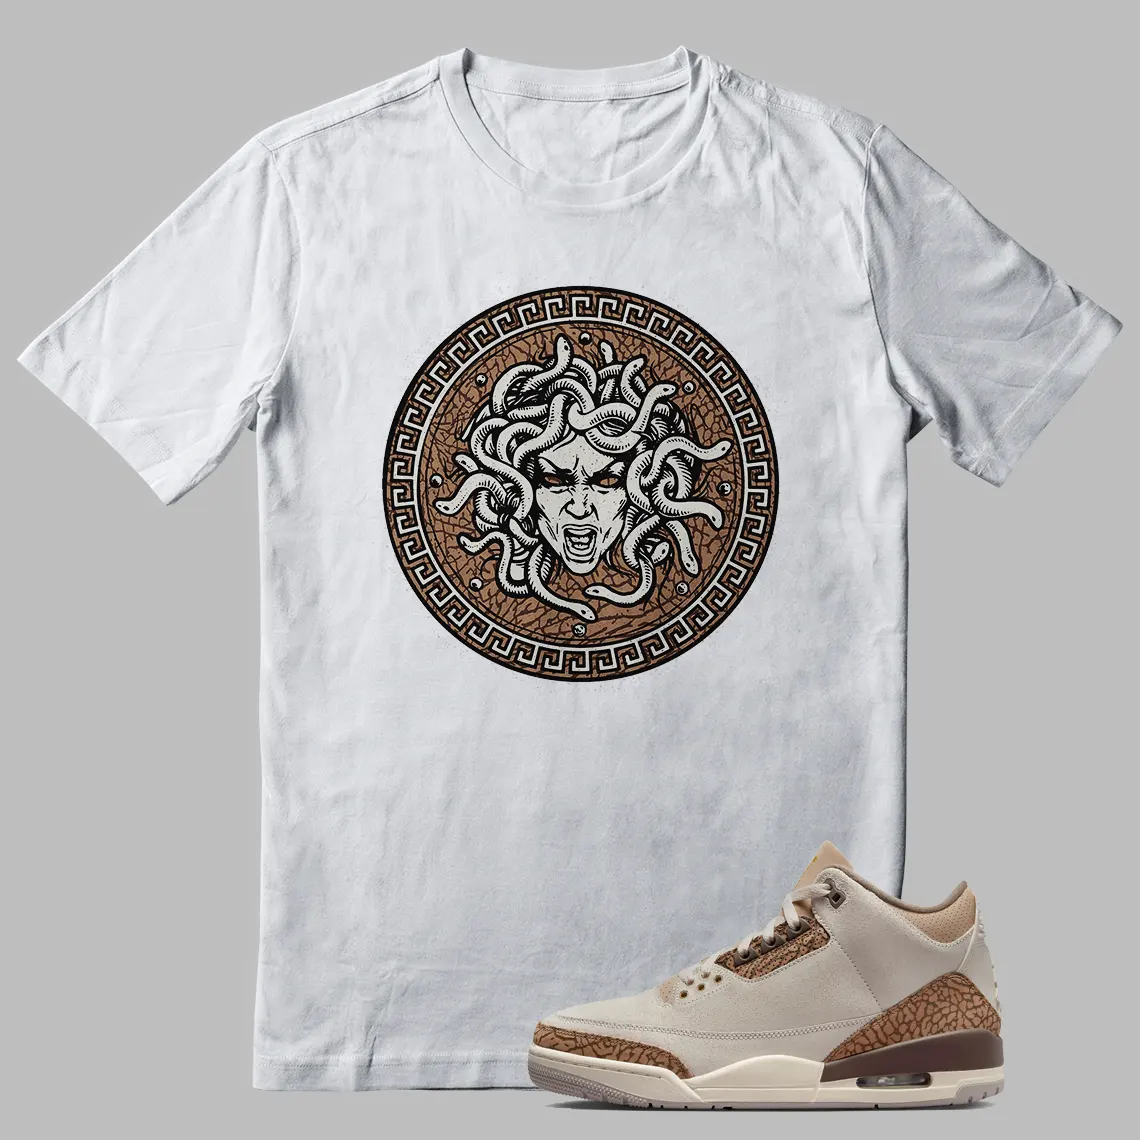 Jordan 3 Palomino Outfit Matching Shirt Medusa Graphic